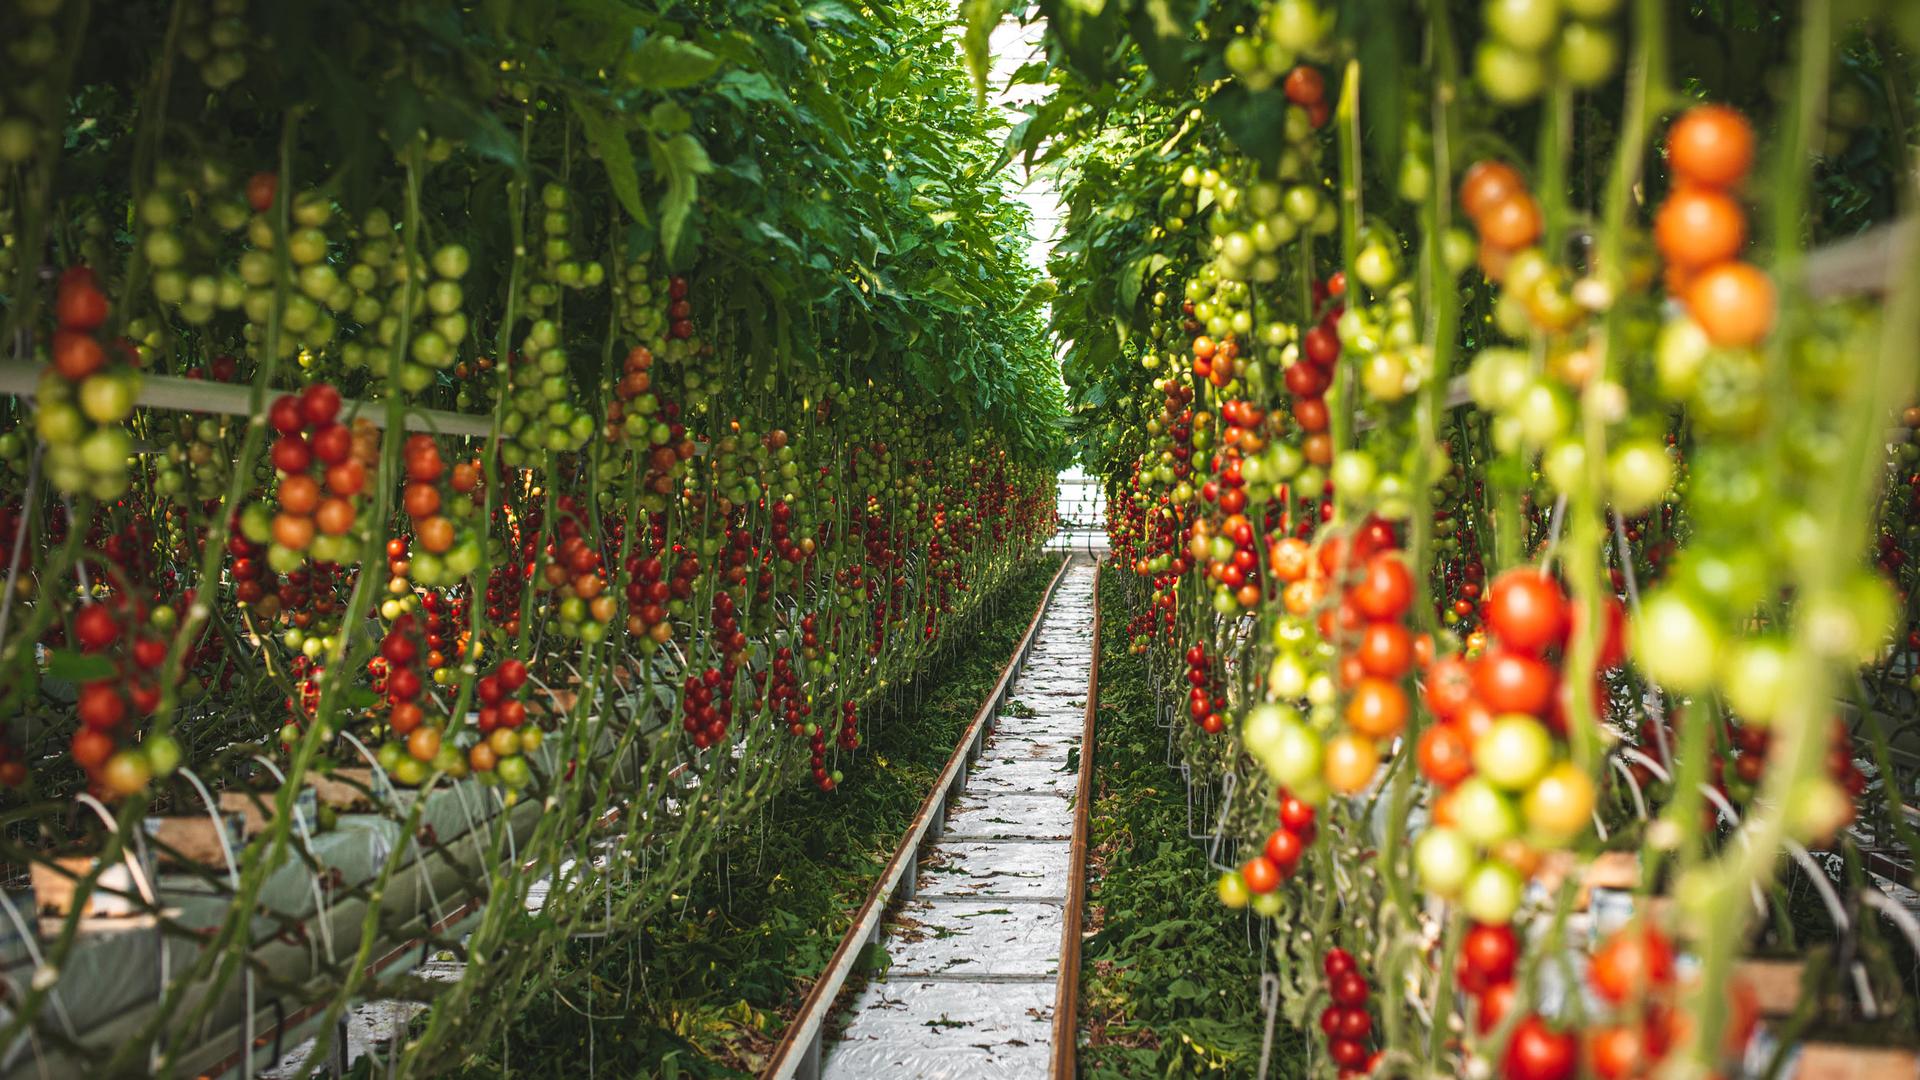 The hydroponic tomato plants at Ráječek Farm rely on manufactured fertilizer to grow.